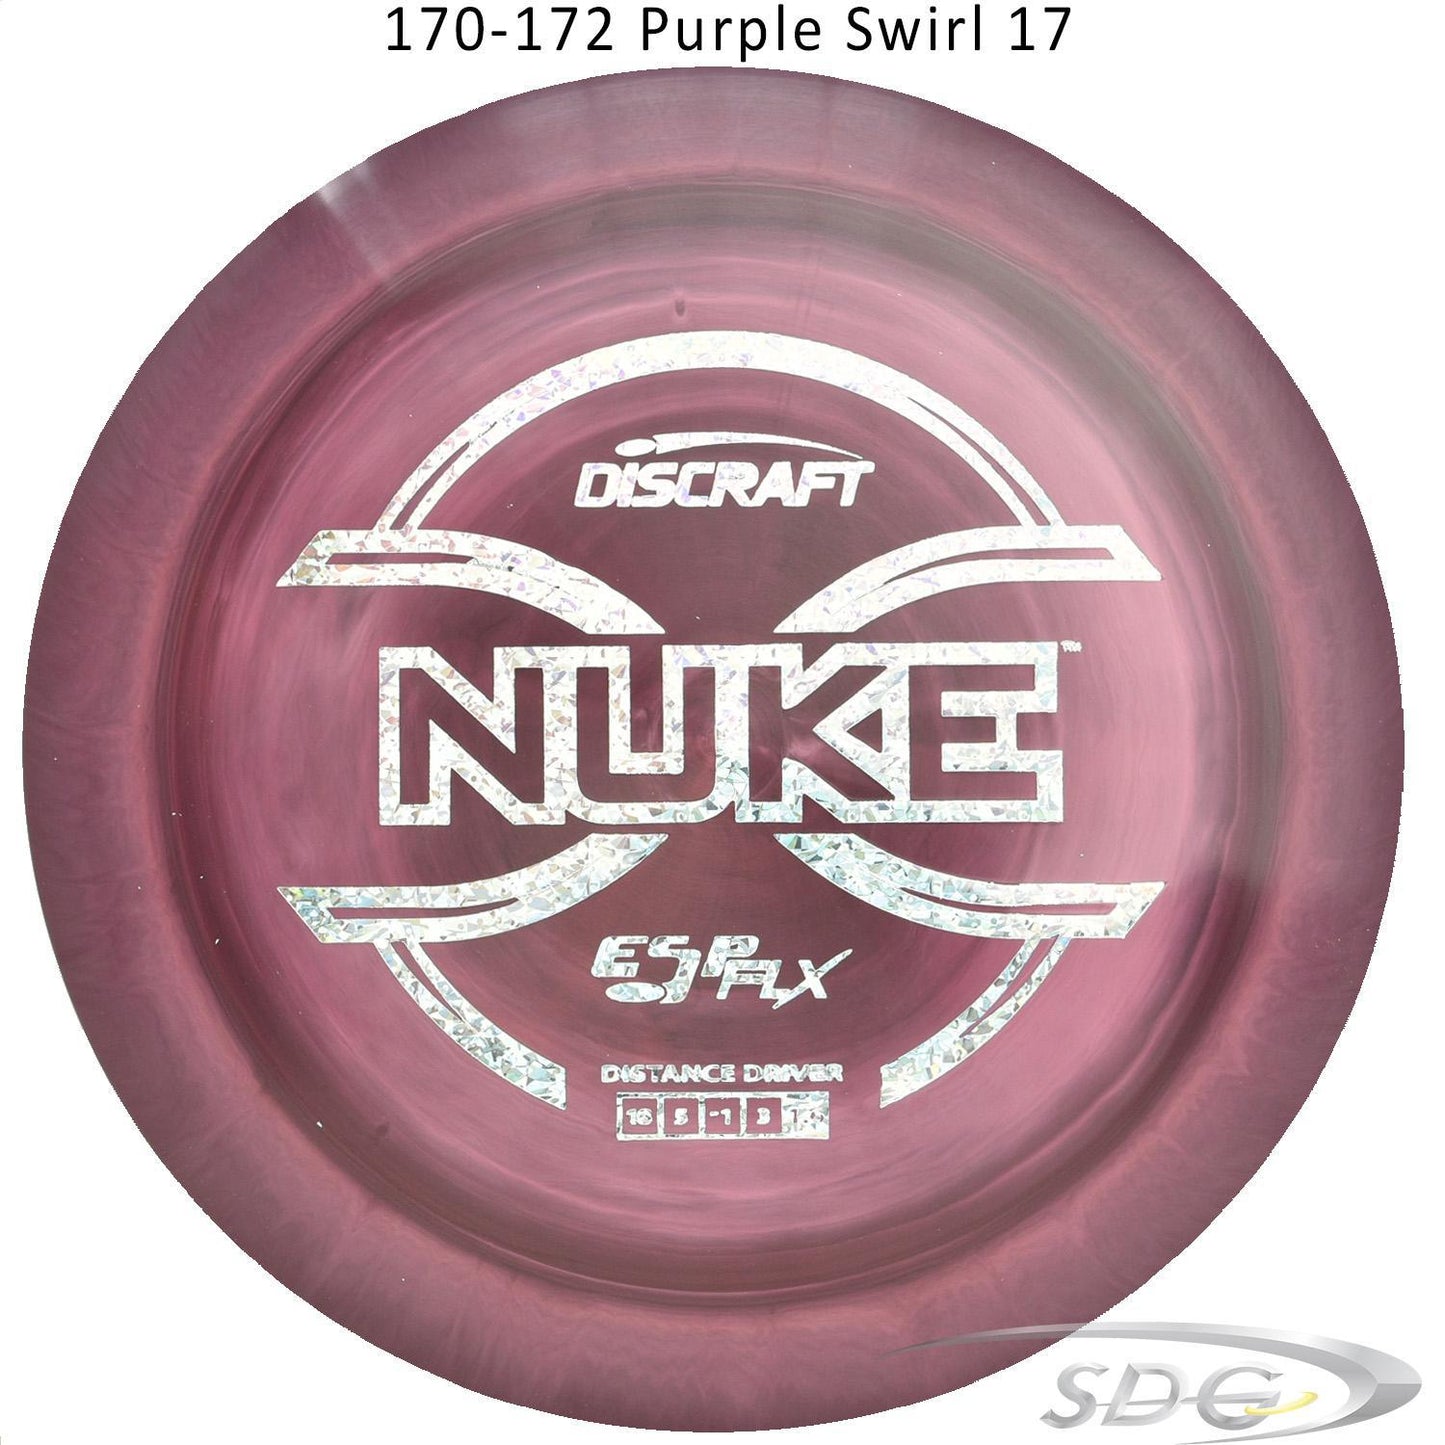 discraft-esp-flx-nuke-disc-golf-distance-driver 170-172 Purple Swirl 17 